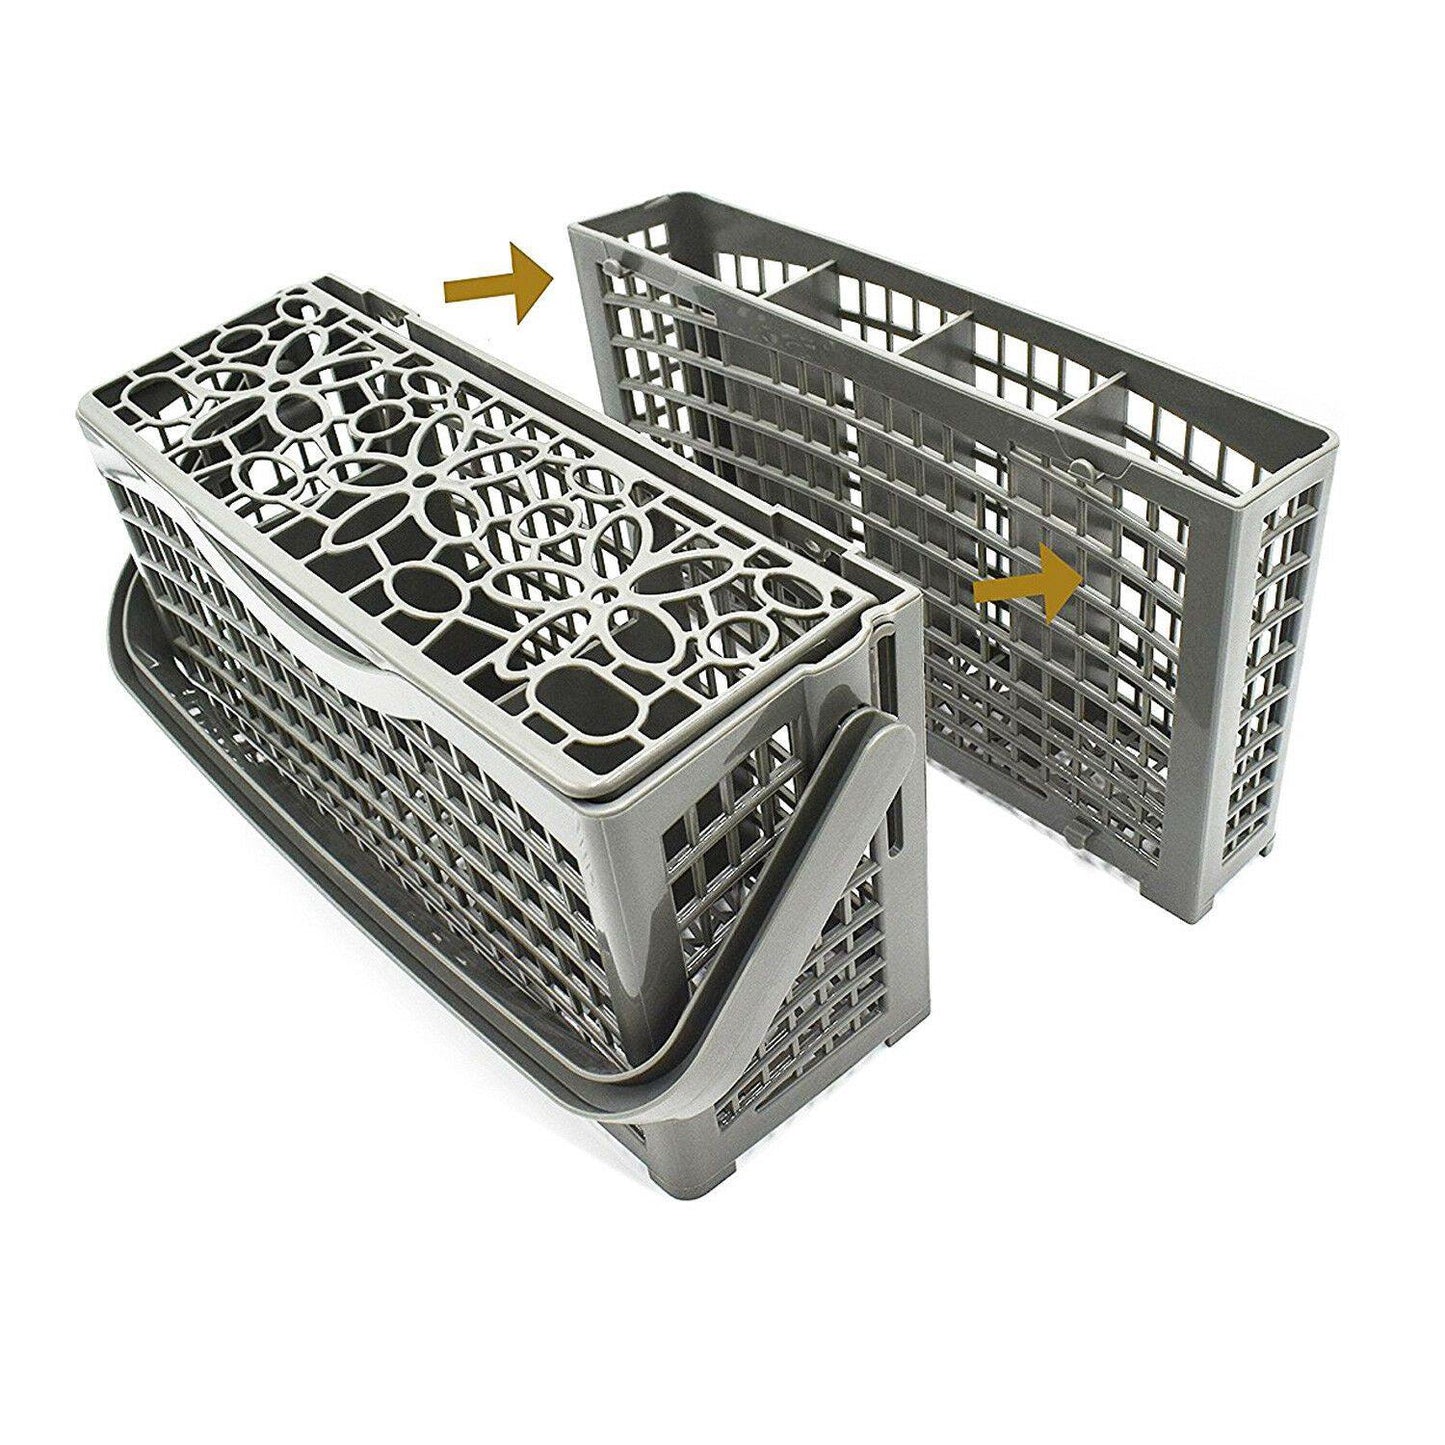 Dishwasher Cutlery Basket for Delonghi LG Samsung Bosch Domain Kleenmaid Sparesbarn